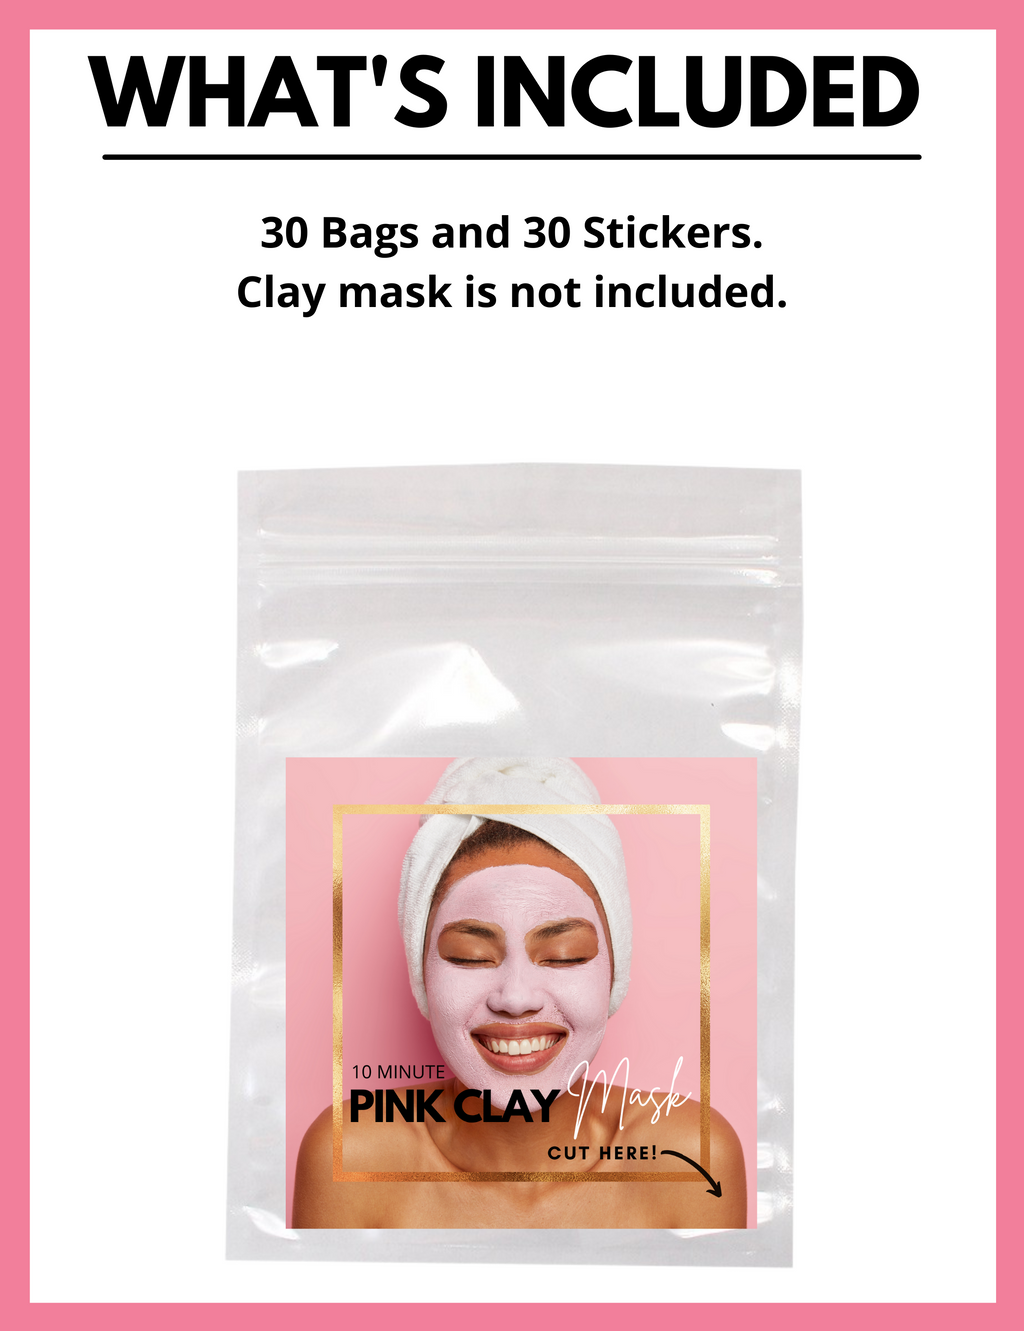 Pink Clay Mask Sample Set